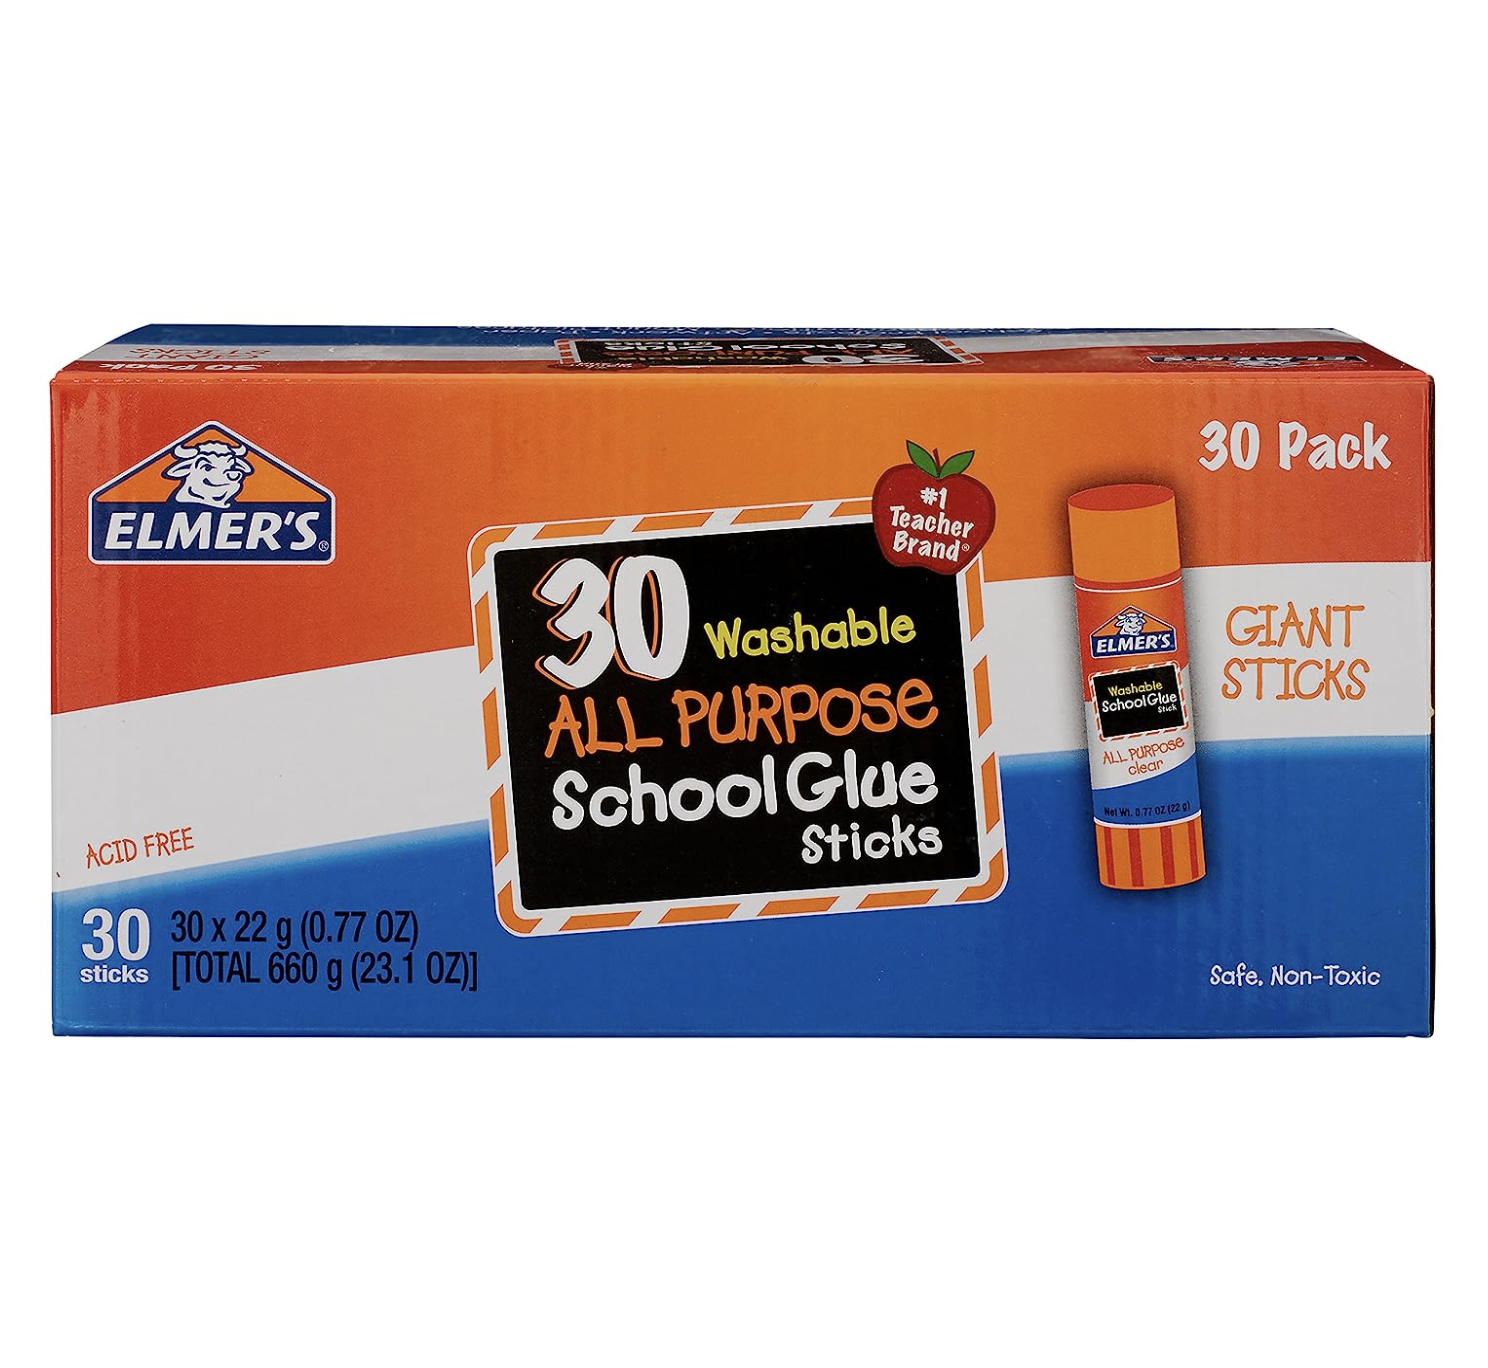 Elmer's All Purpose School Giant Glue Sticks 30-Pack only $16 shipped!